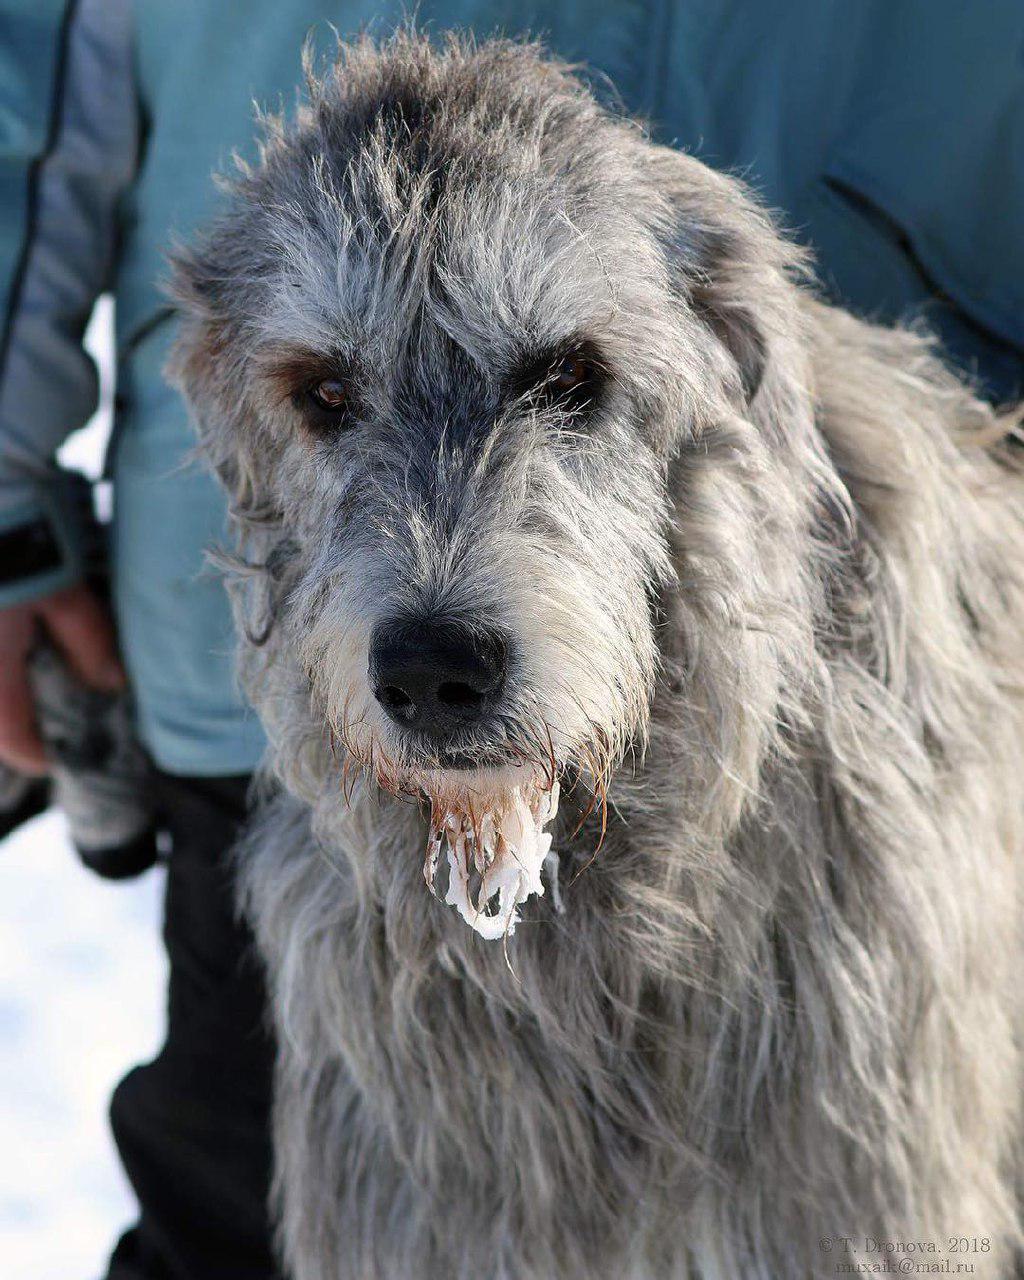 Irish Wolfhound dog with a snow on its beard